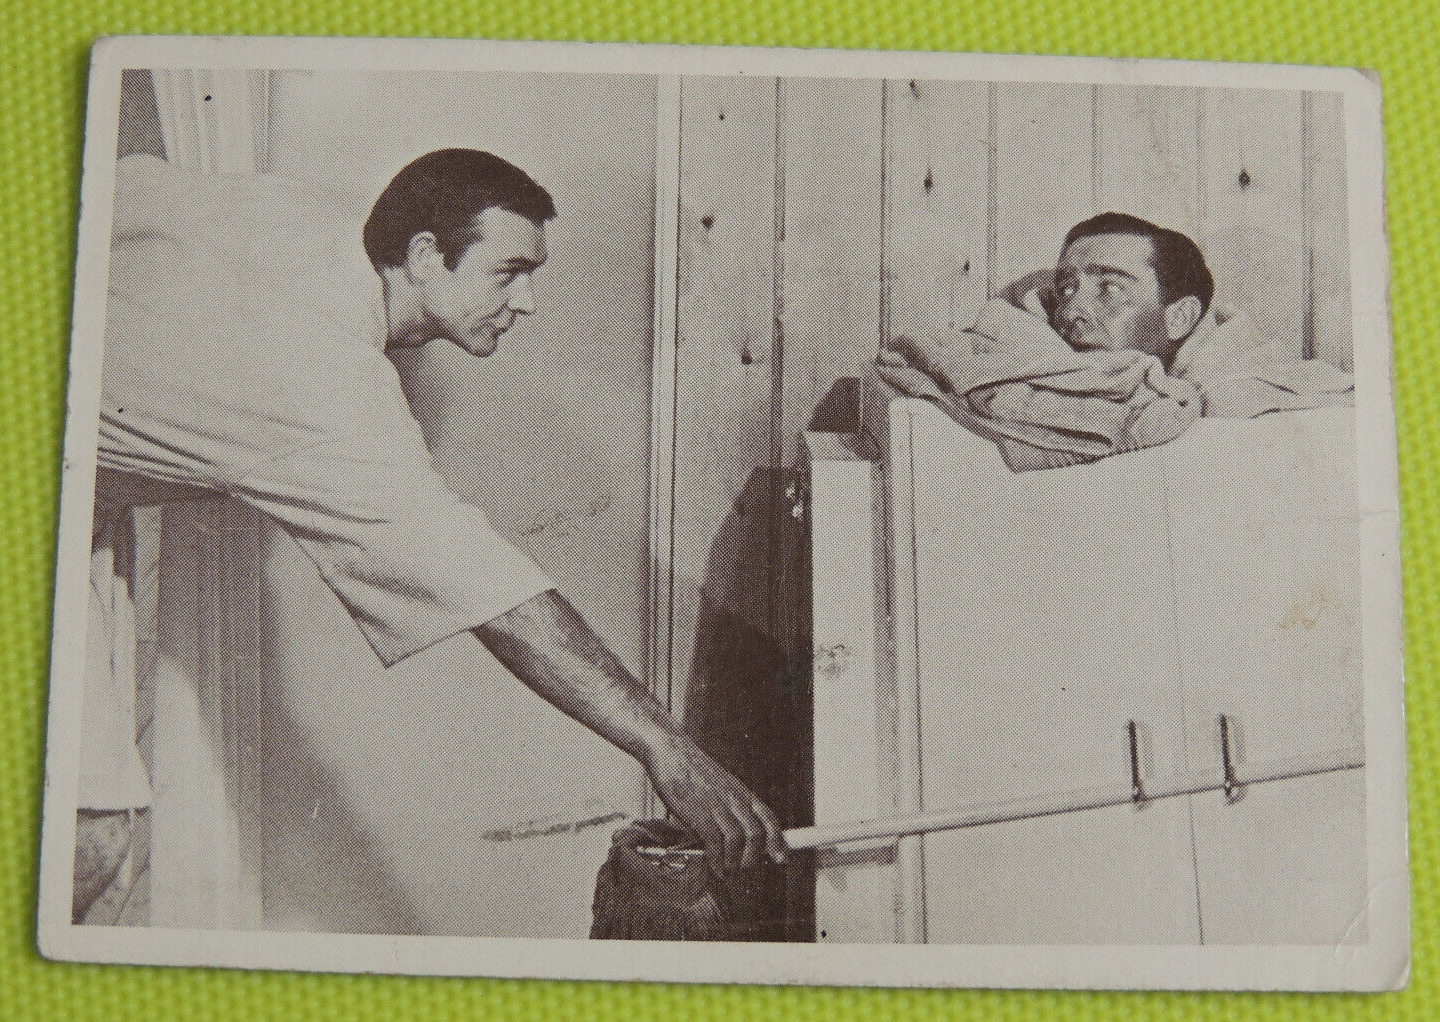 1966 Glidrose Thunderball James Bond 007 Card #16 Heat Treatment - Sean Connery